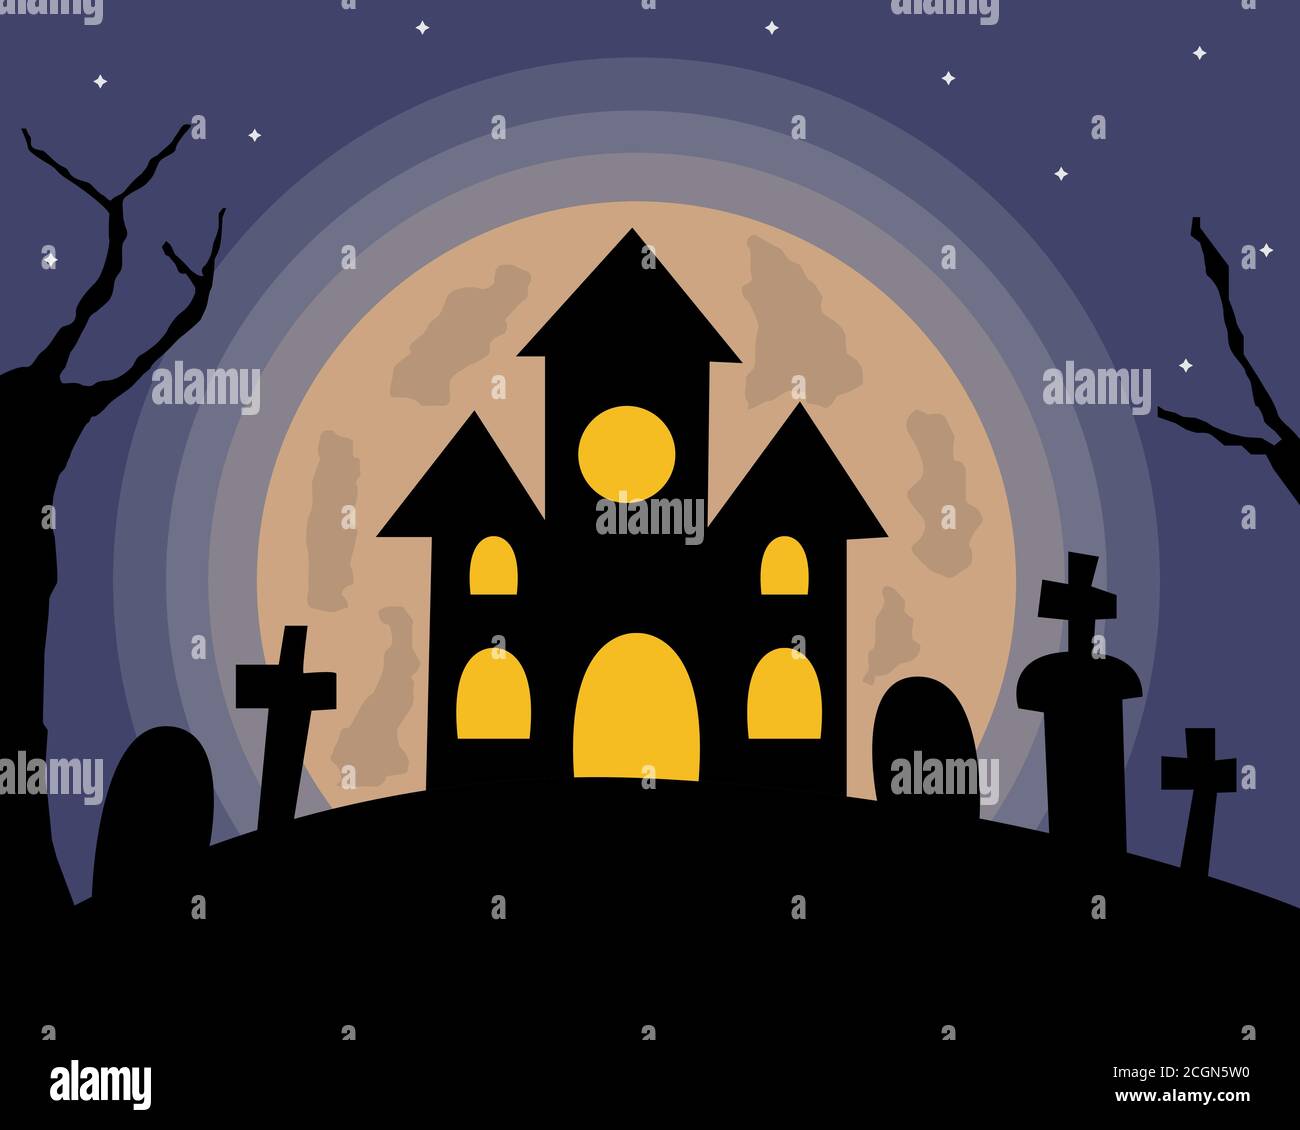 Illustration vector design of Halloween landscape background Stock Vector